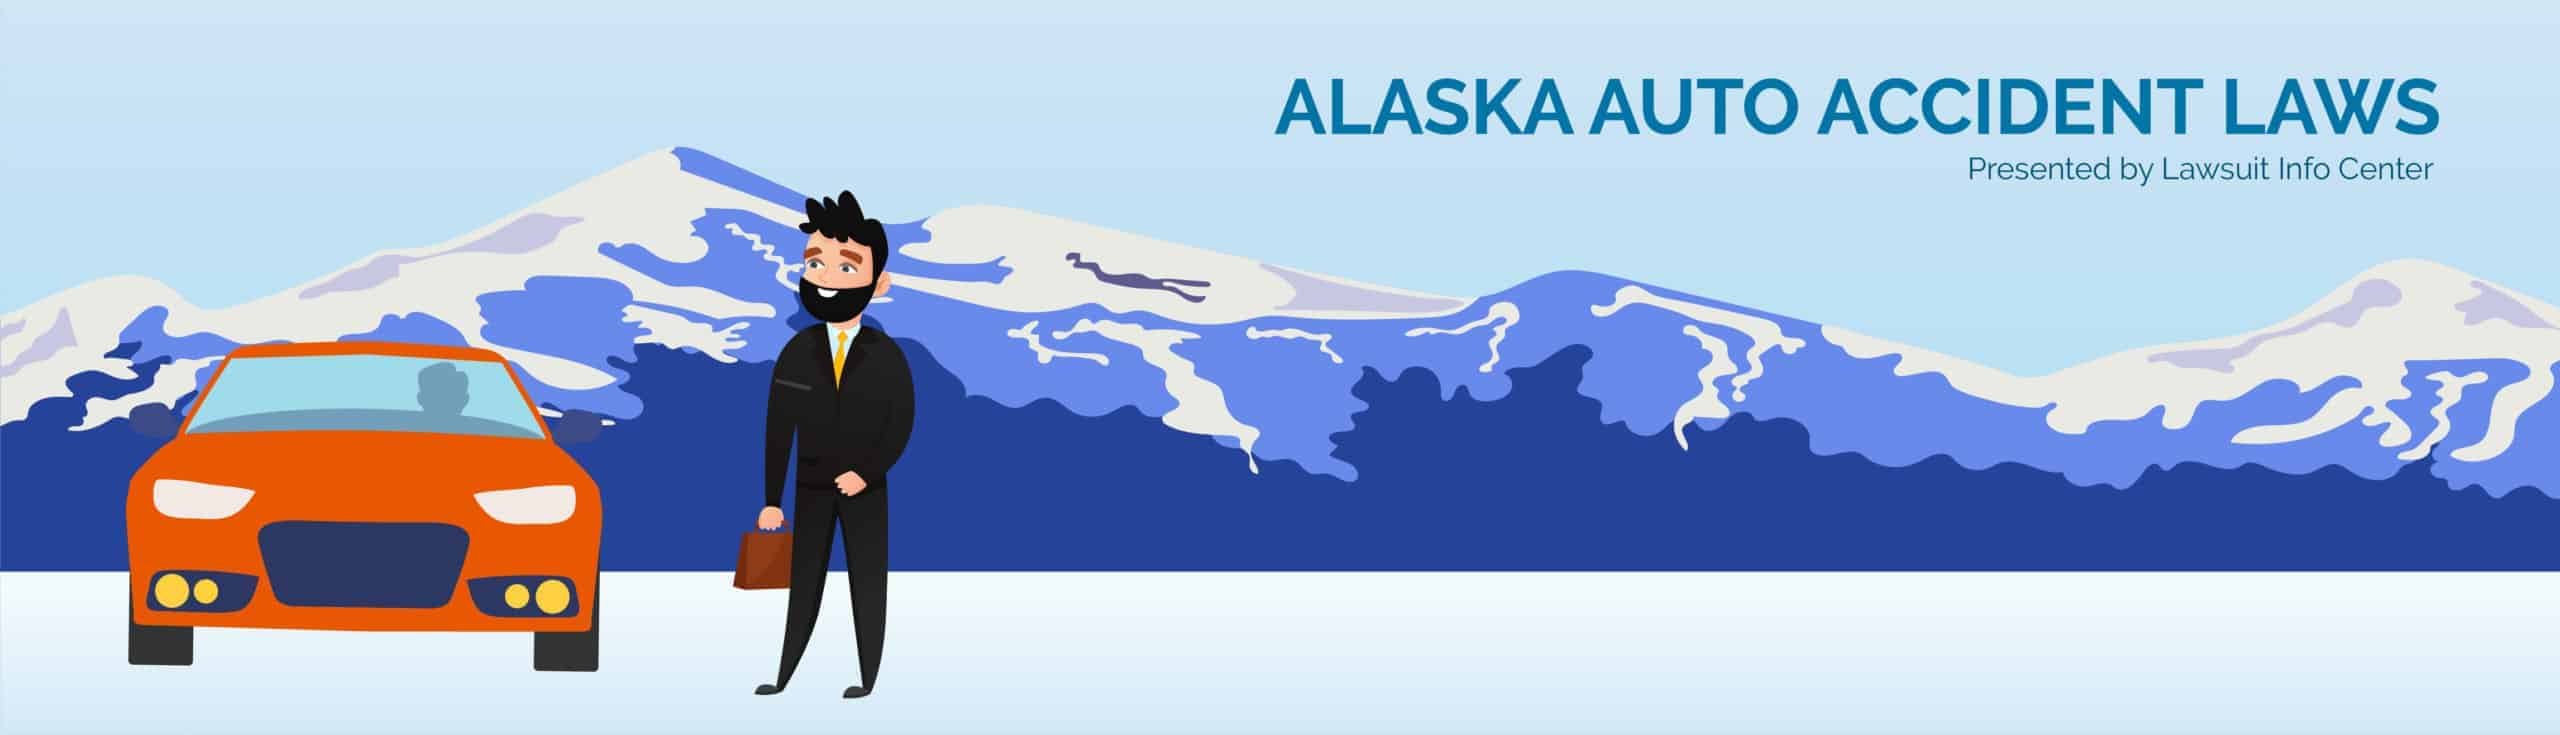 Alaska Auto Accident Laws